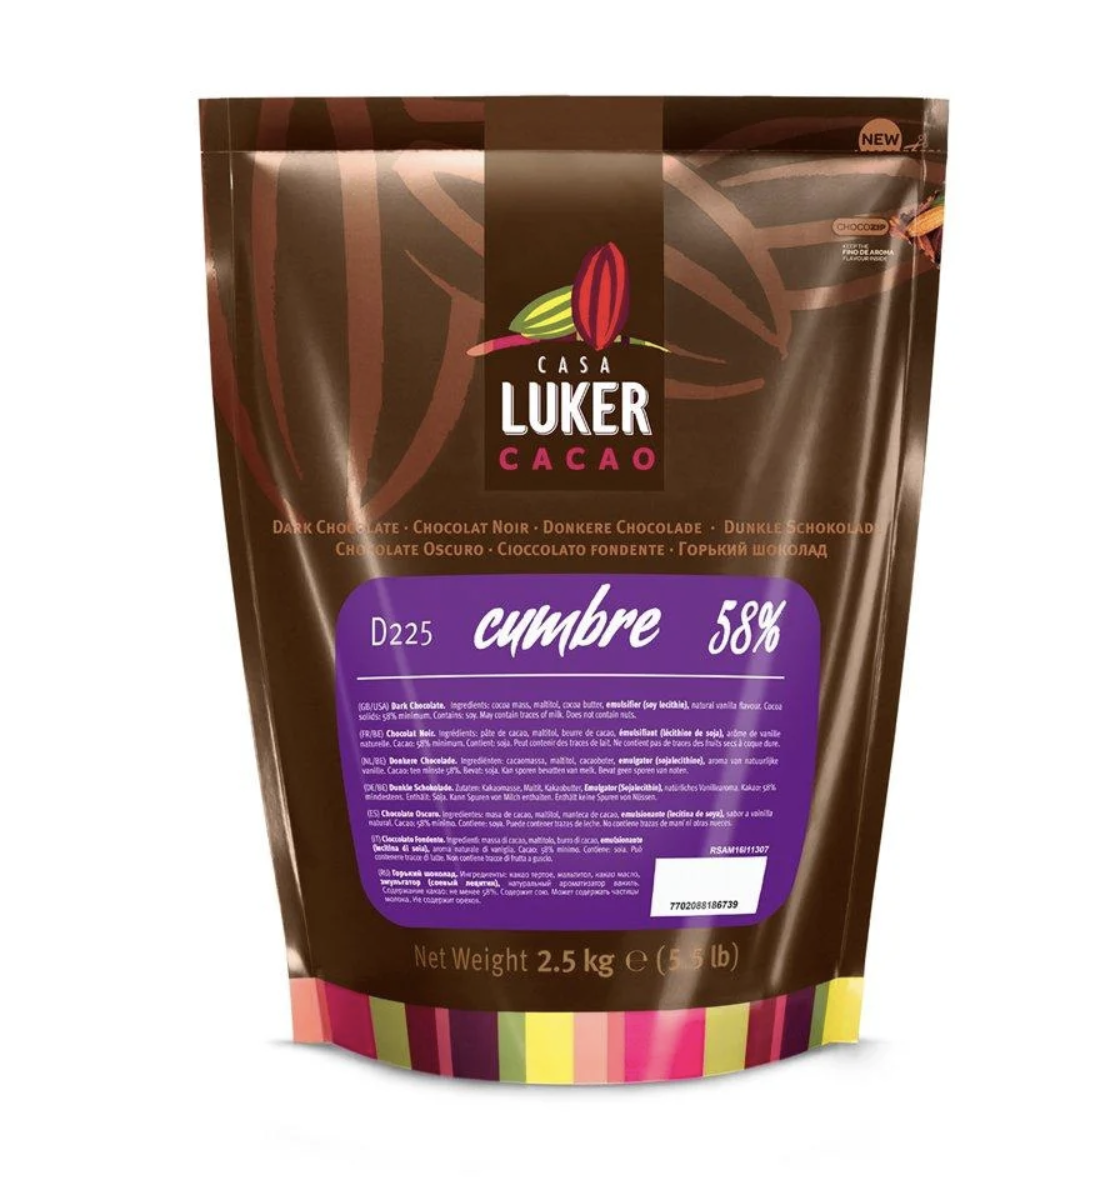 Гуд лукер ру. Какао тертое Luker. Шоколад белый 34,5% какао в галетах Nevado casa Luker Cacao, 500 гр.. Шоколад Лукер. Колумбийский шоколад.